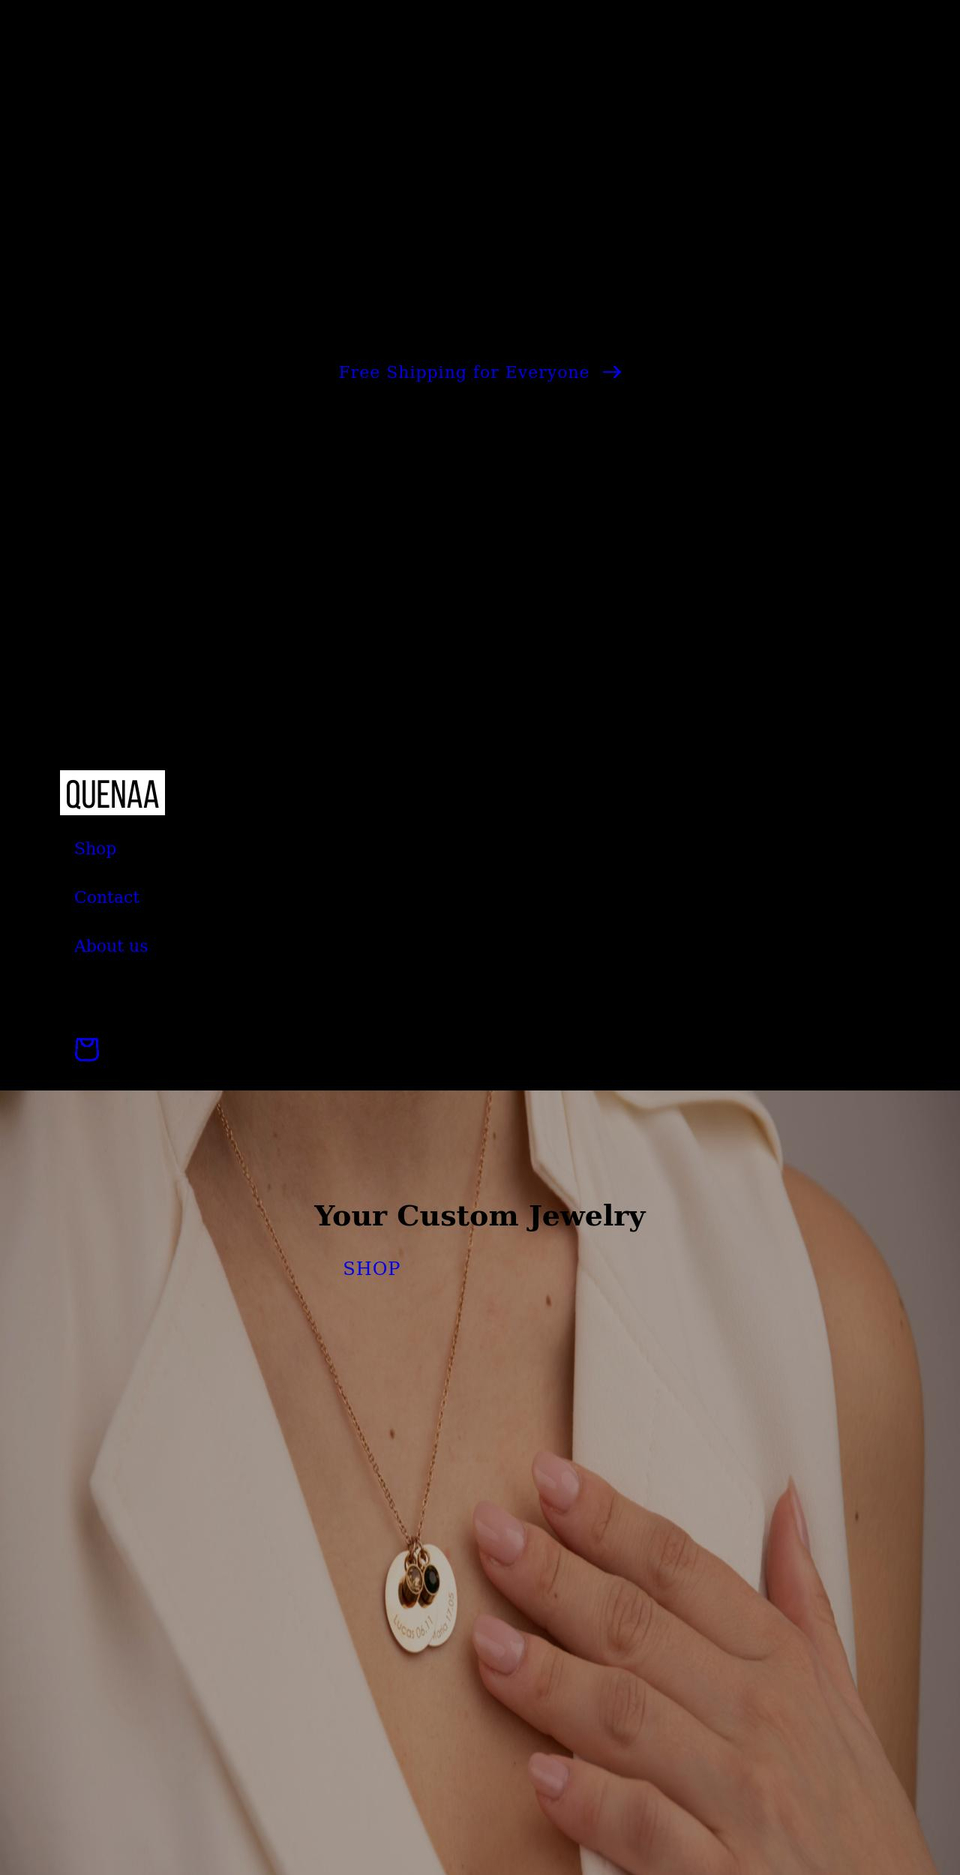 quenaa.com shopify website screenshot